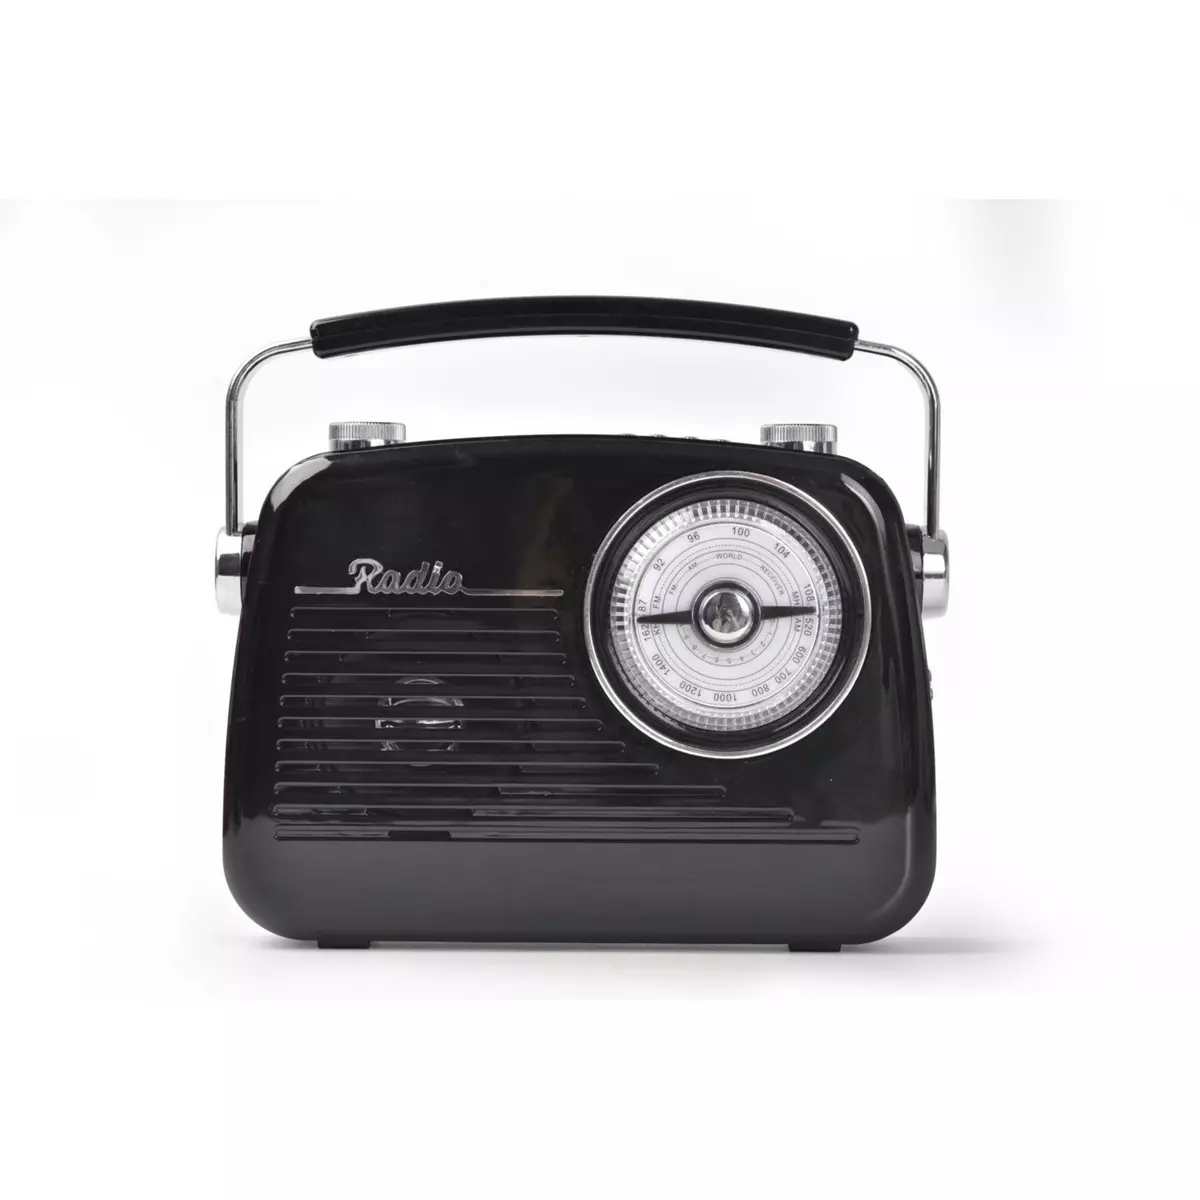 QILIVE Radio portable Bluetooth vintage - Noir pas cher 